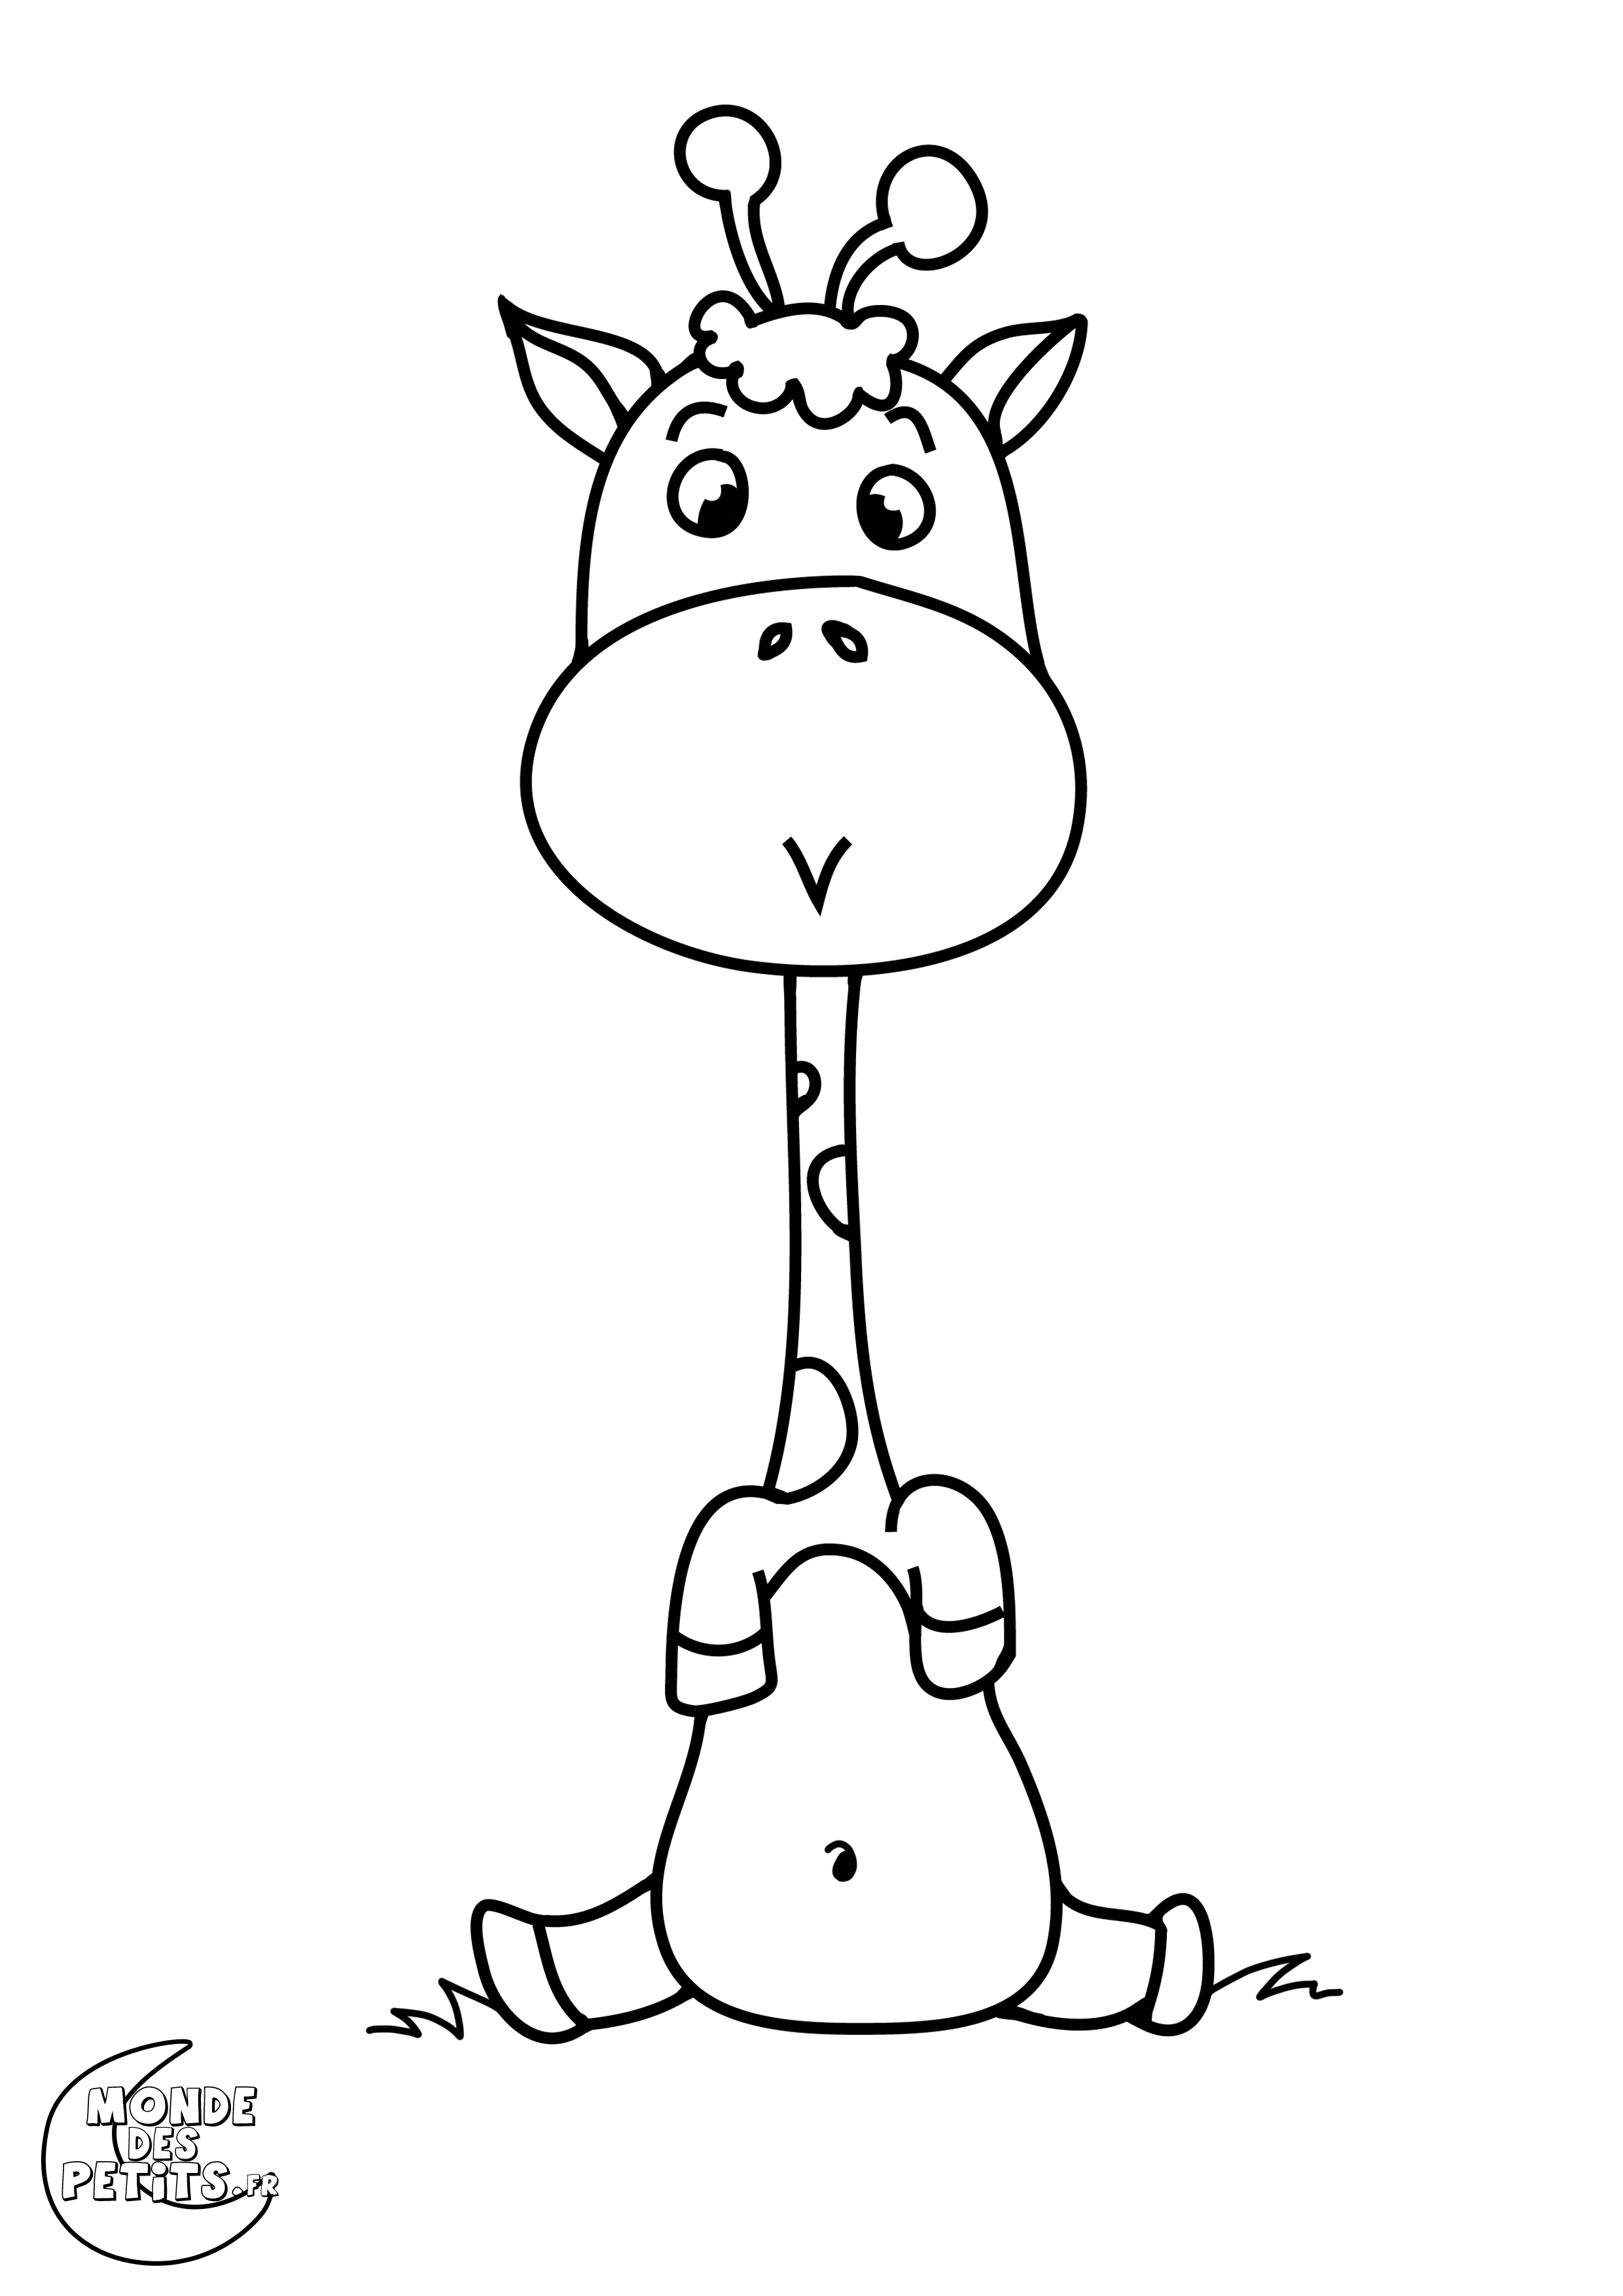 dessin tete girafe